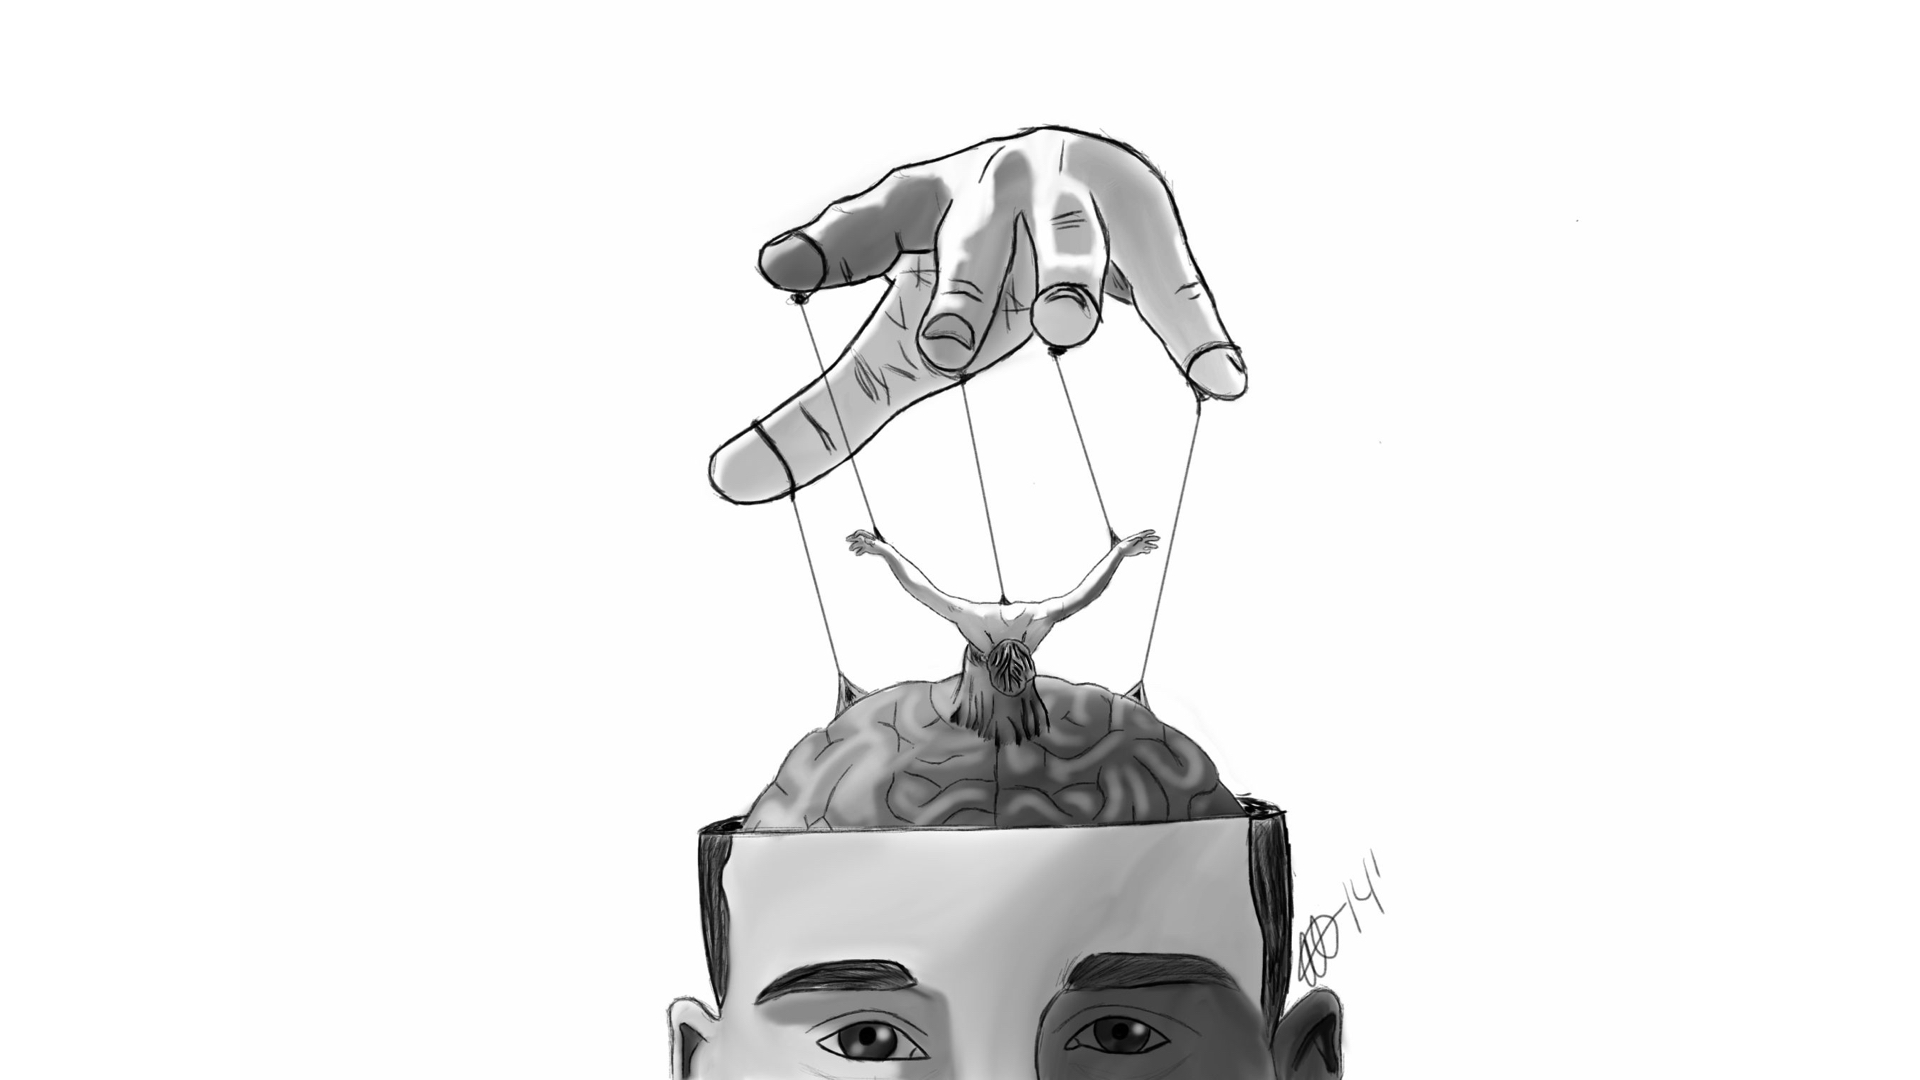 Brain puppeteer